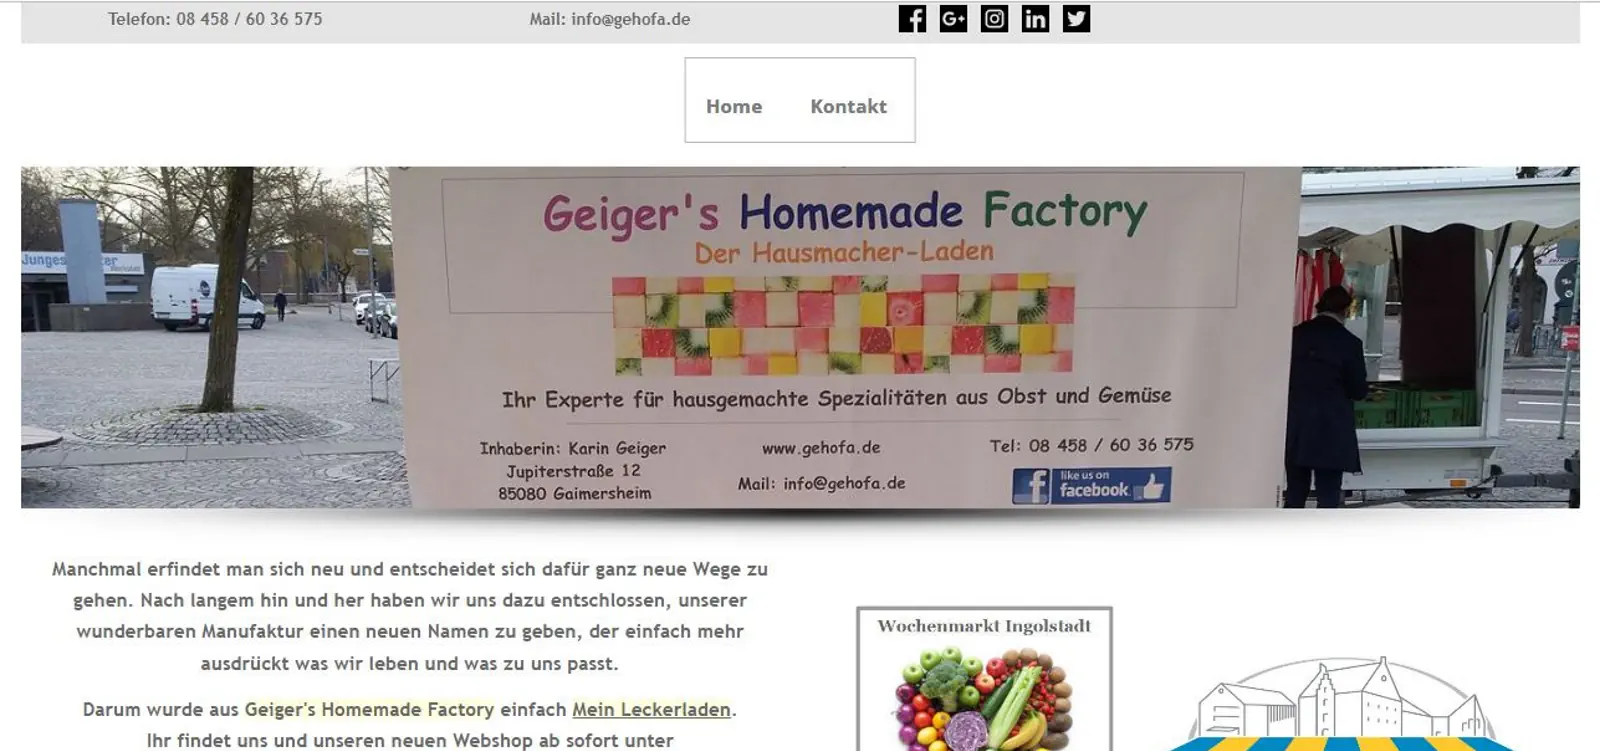 Geiger's Homemade Factory